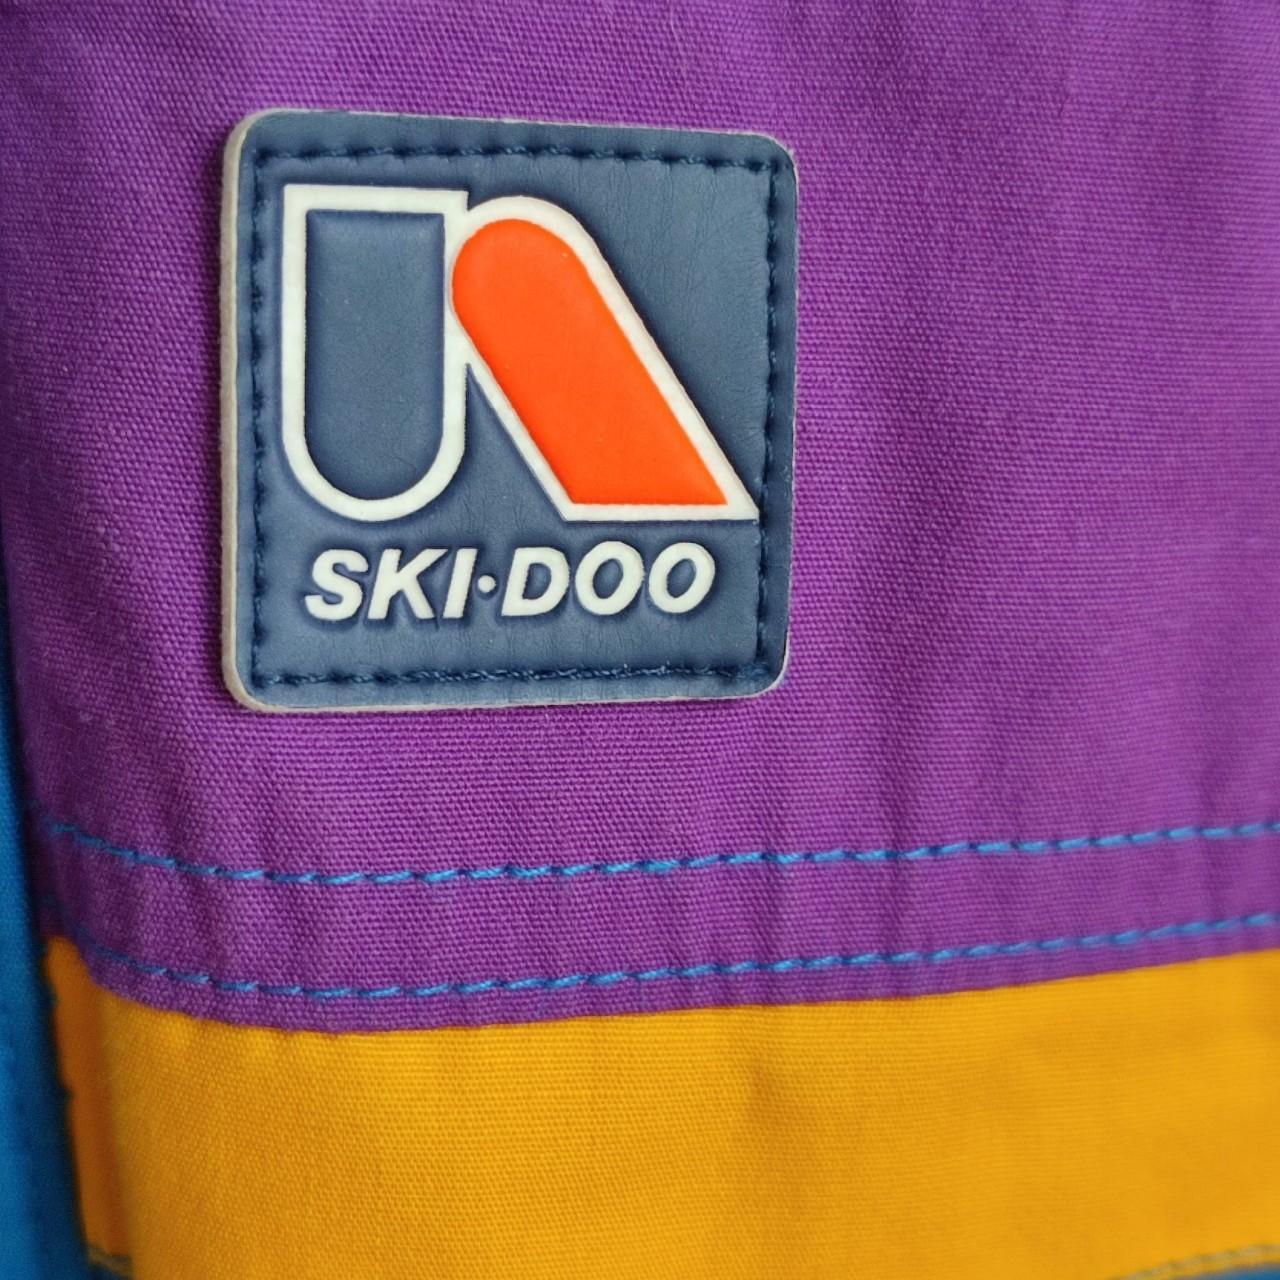 Giaccone Ski-doo